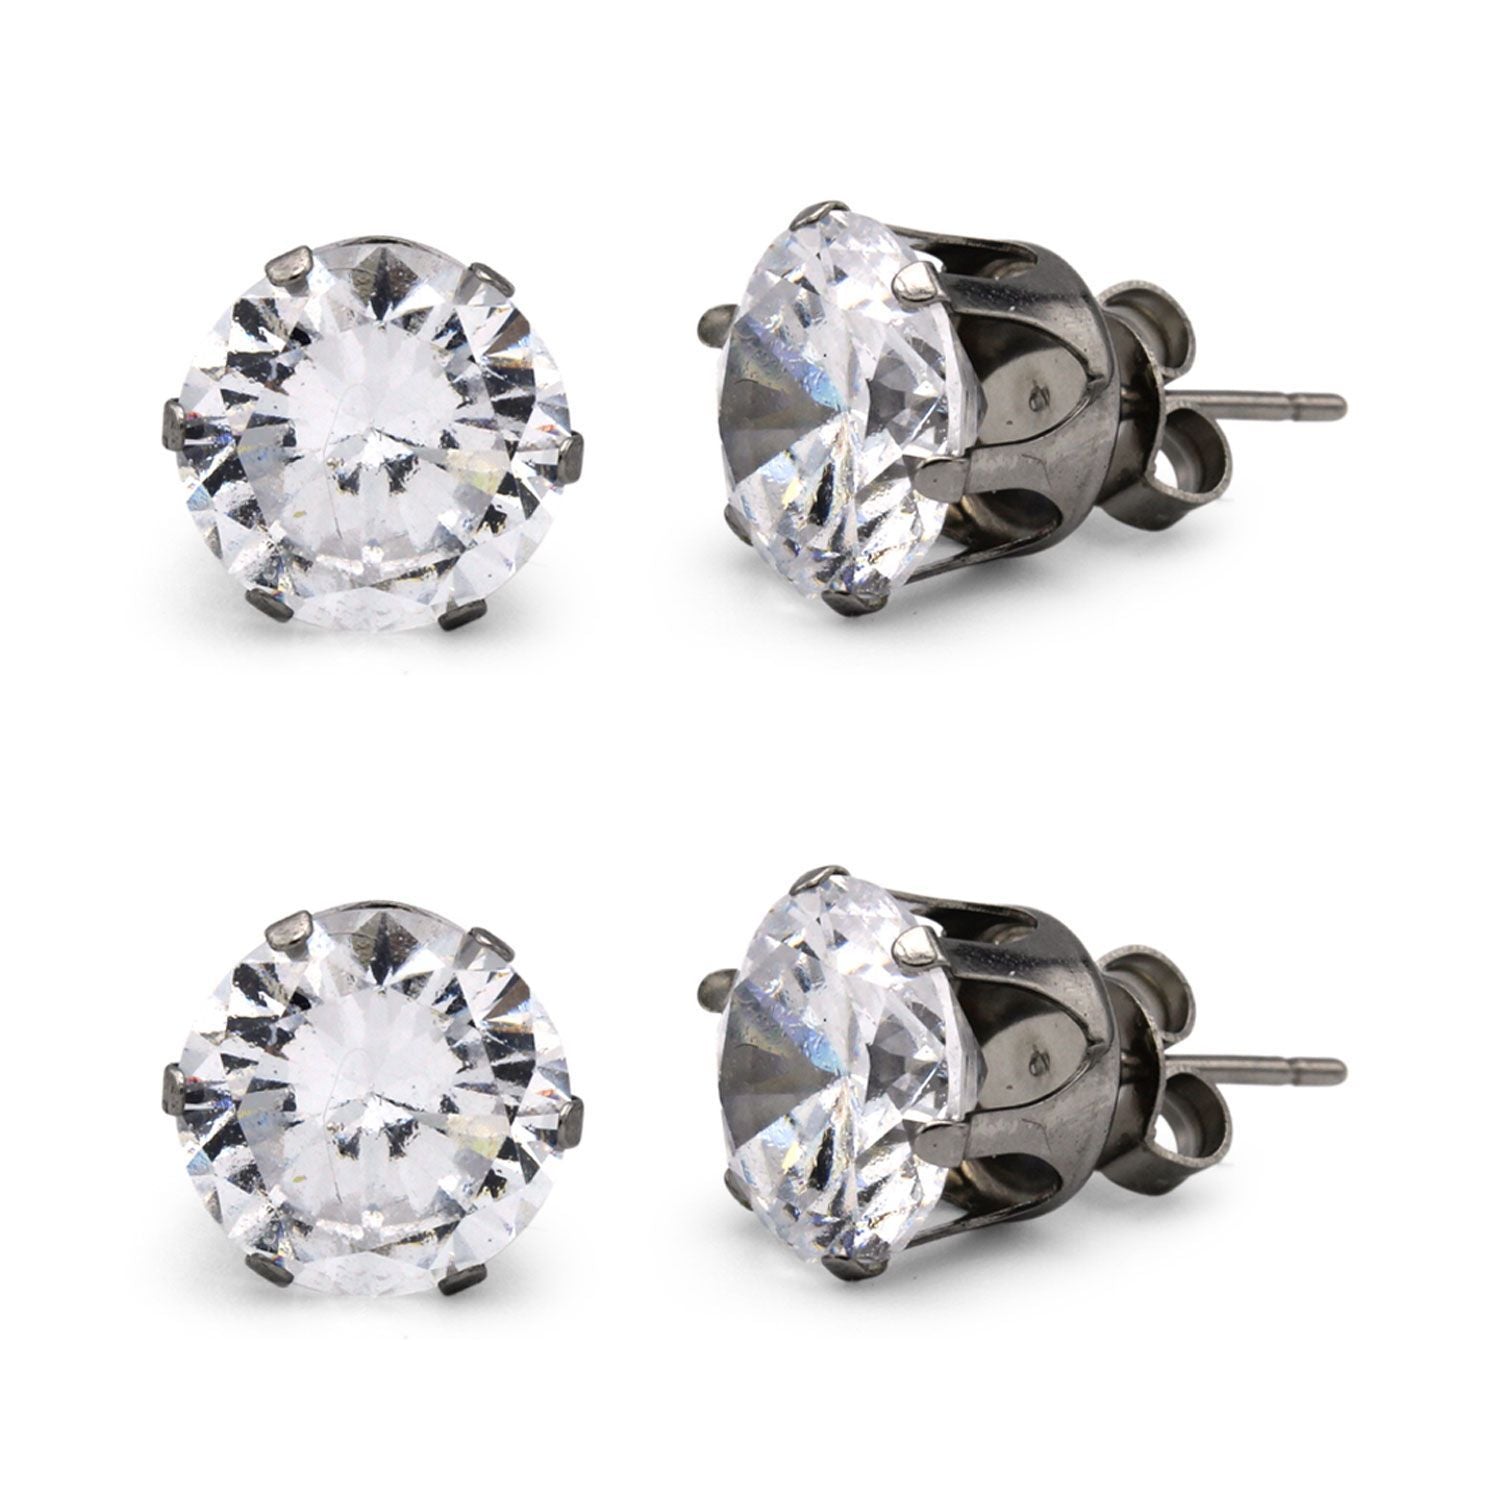 Cubic Zirconia Round Silver Stud Earrings Set Of 2 Stainless Steel Jewelry Men Women